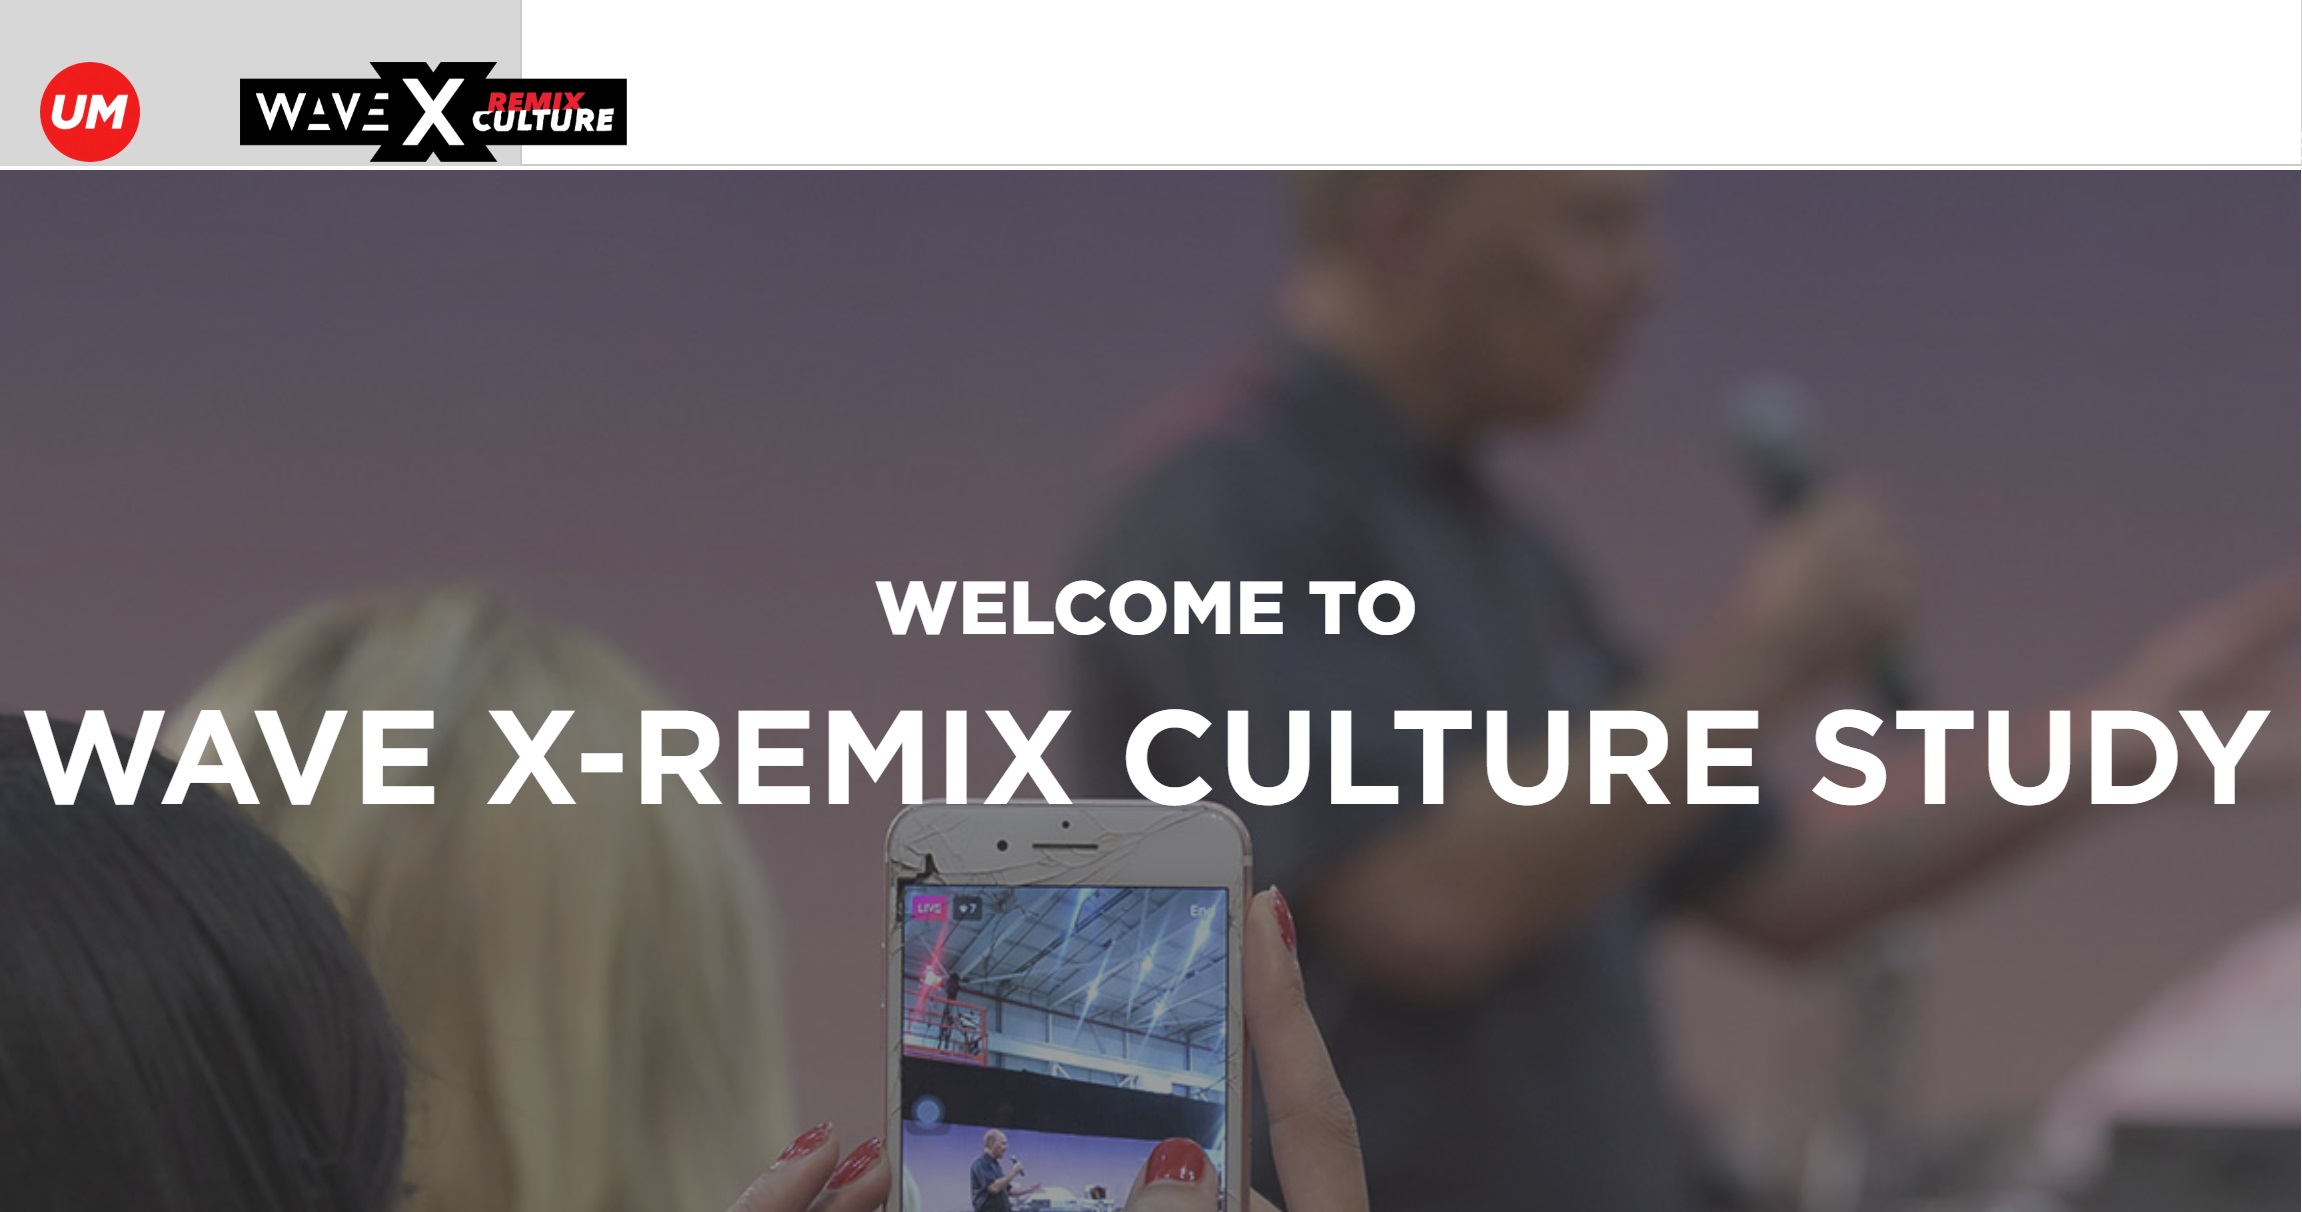 wavex, culture um, study, remix, programapublicidad